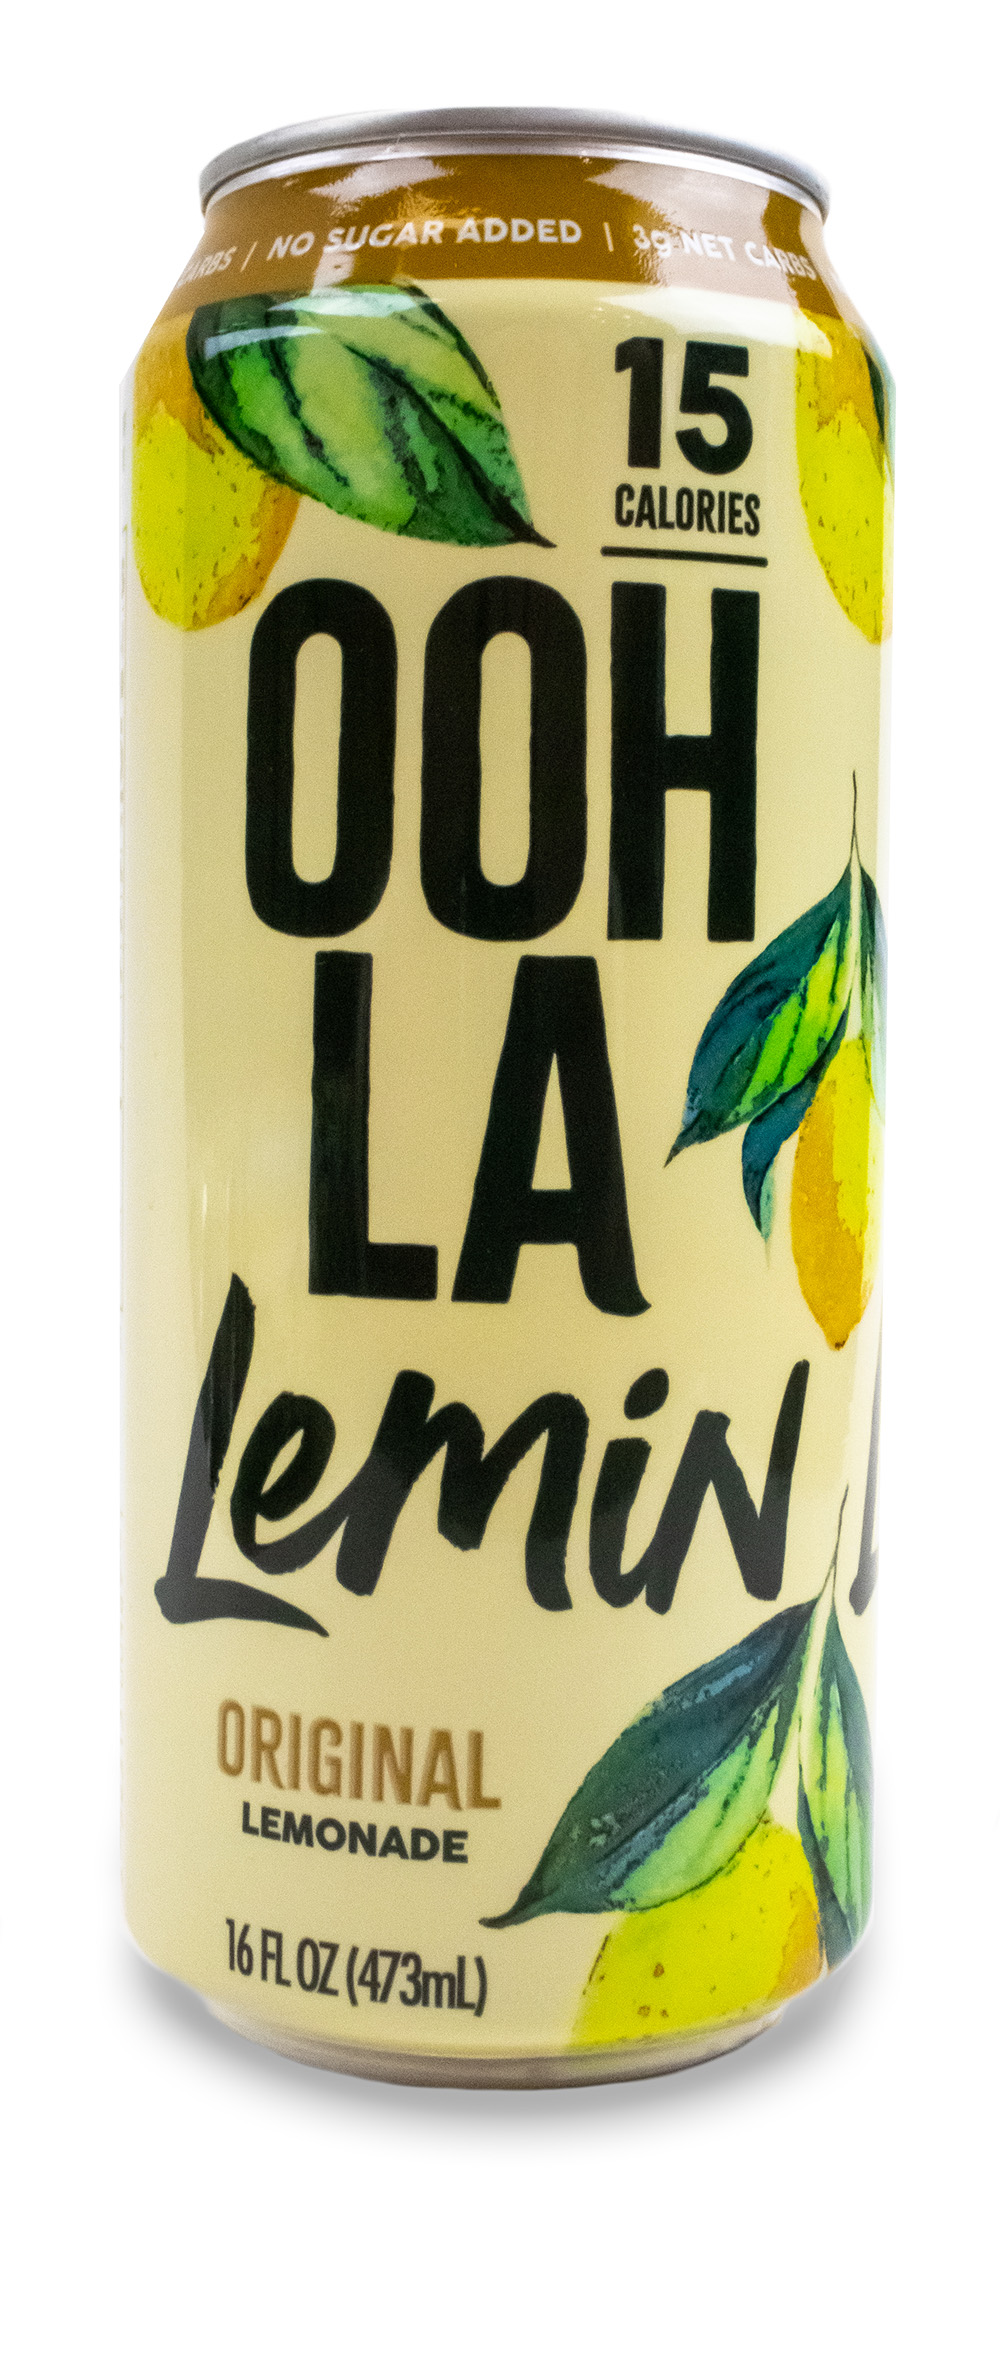 Ooh La Lemin Original - image 1 of 2